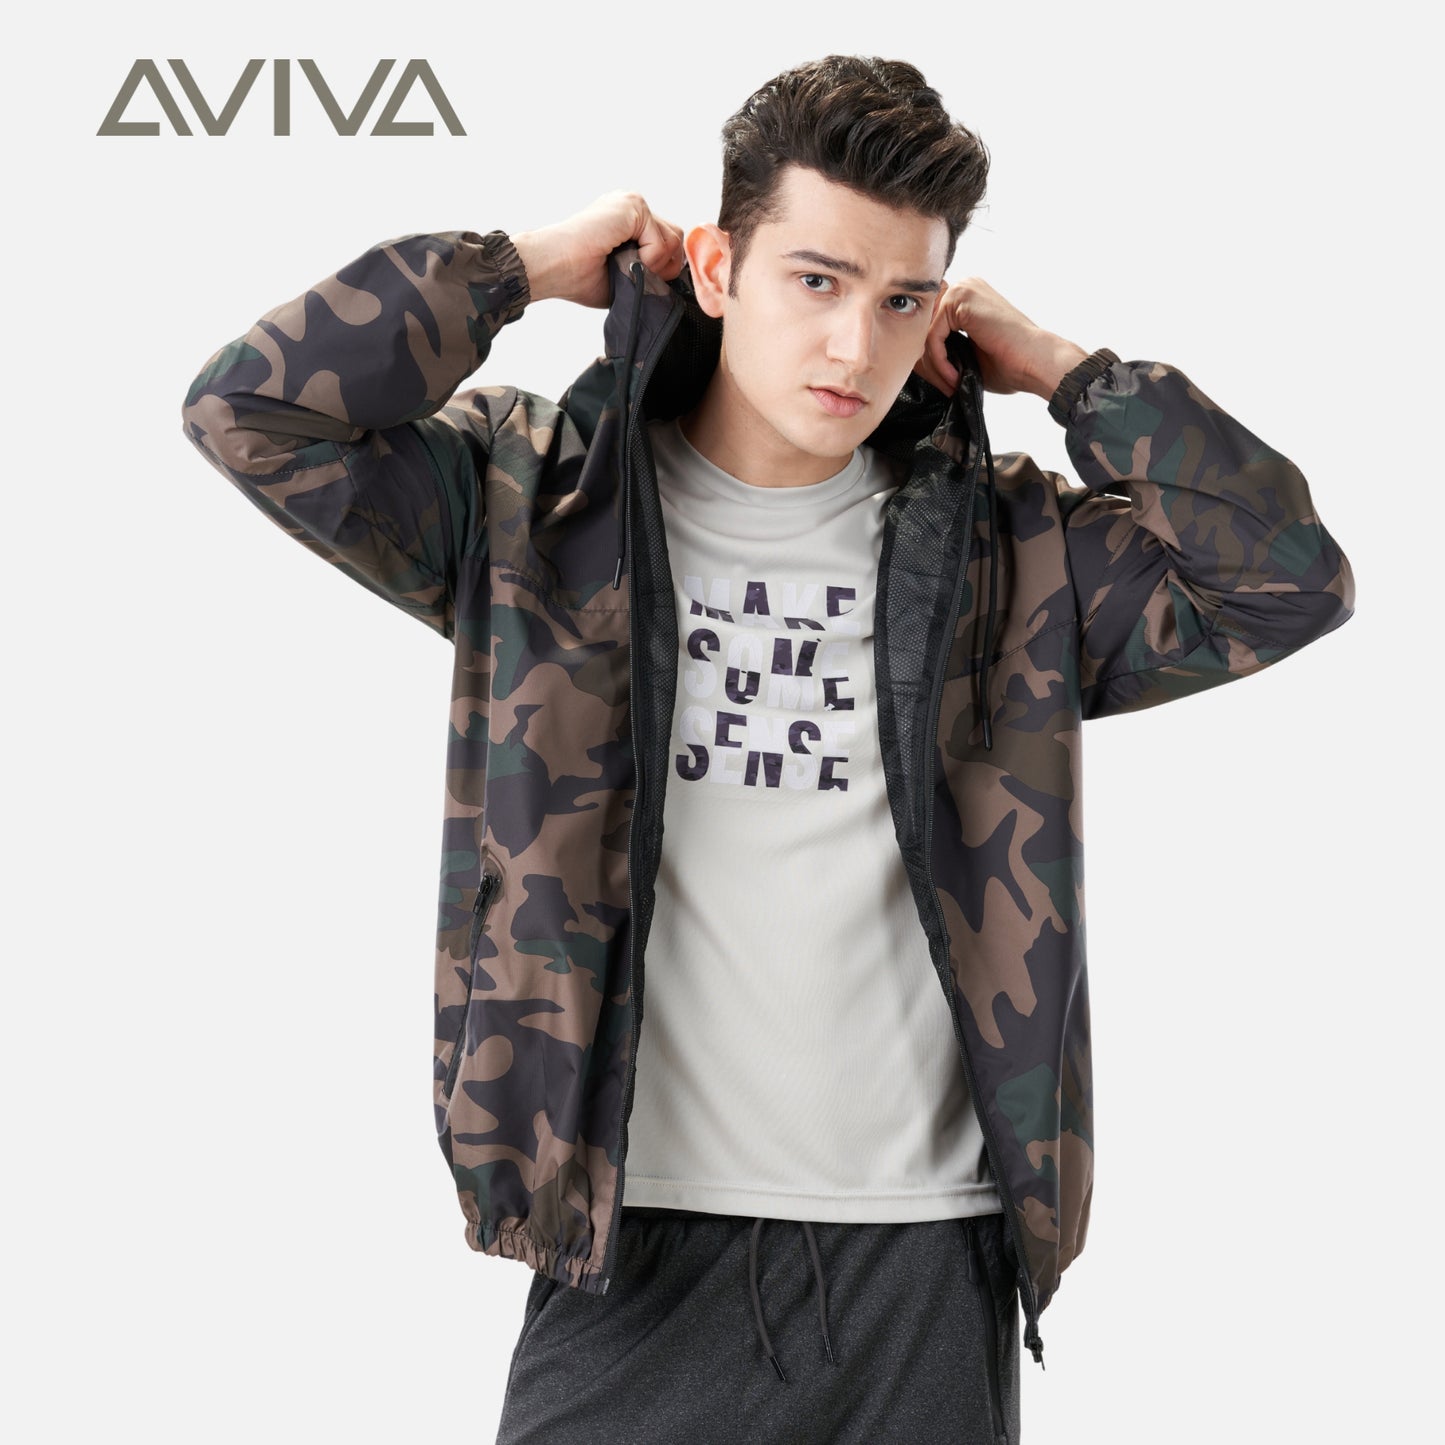 Aviva Men's Slim Fit Long Sleeve Camou Sport Jackets (91-10058)